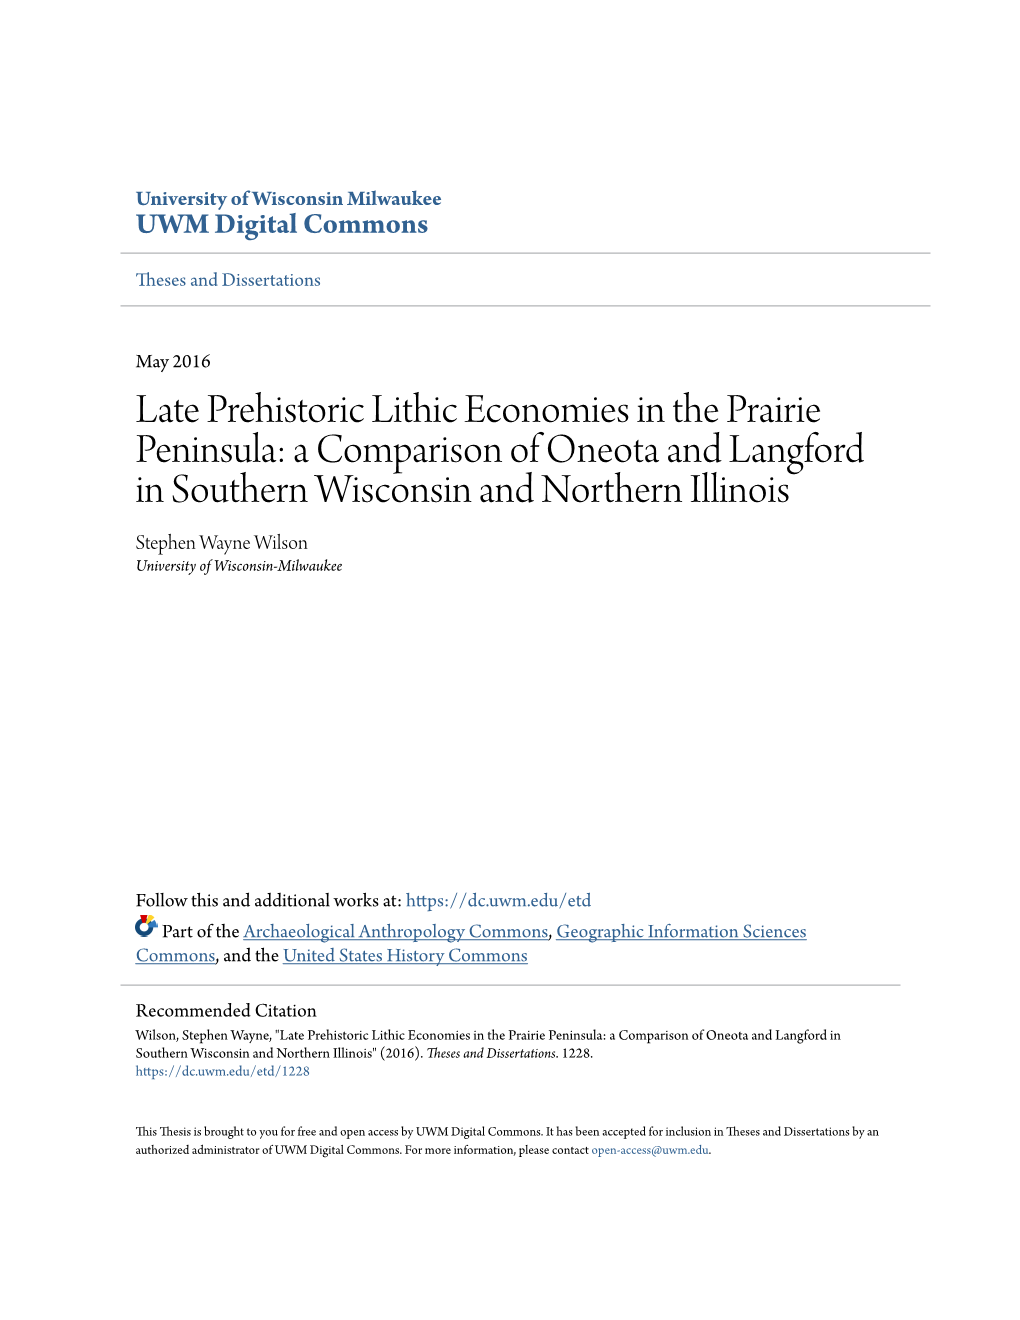 Late Prehistoric Lithic Economies in the Prairie Peninsula